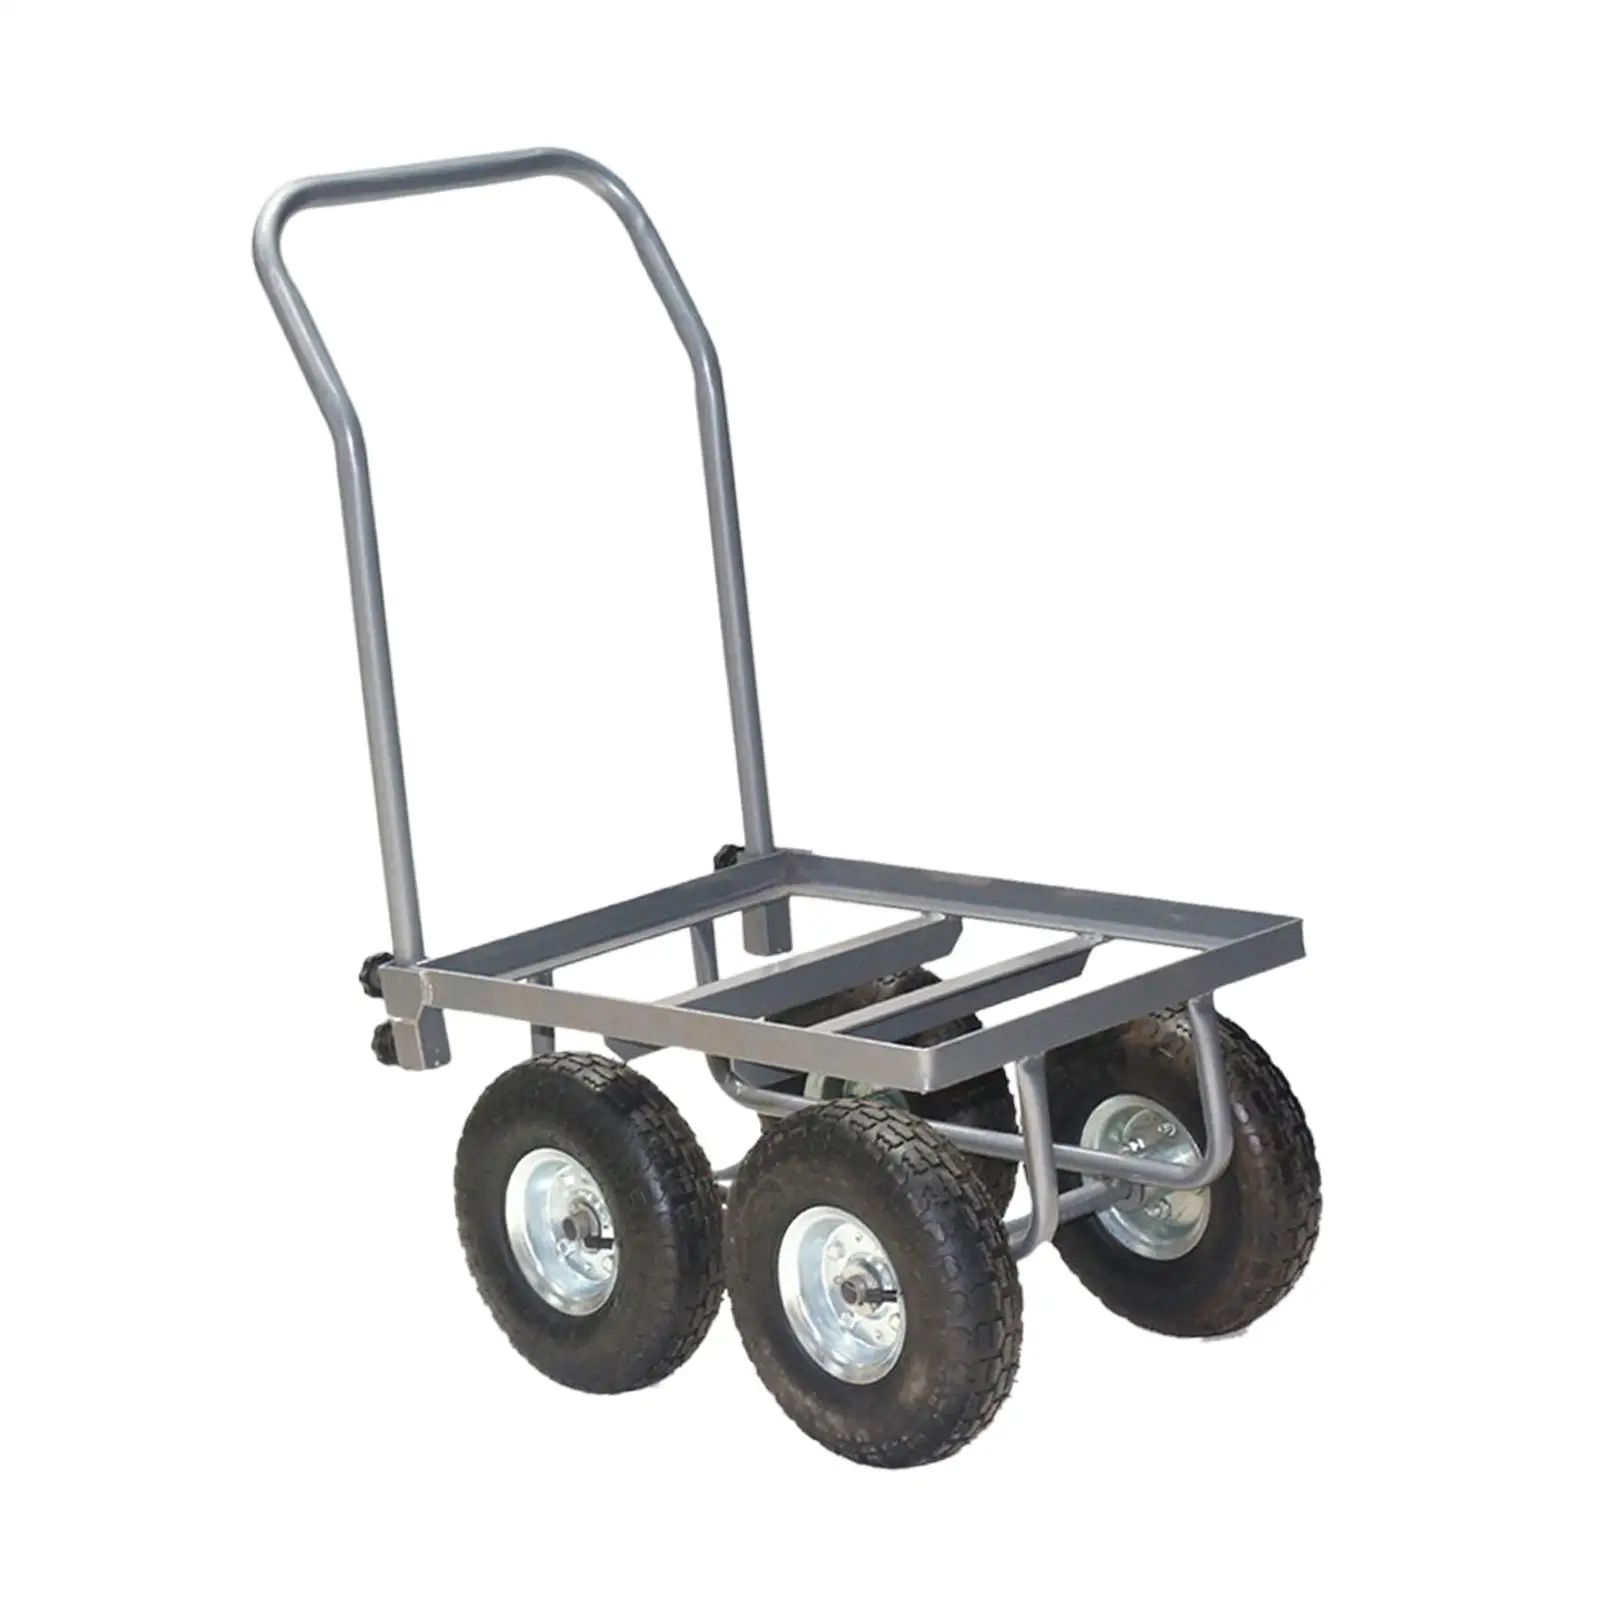 Folding Platform Truck with 4 Wheel Heavy Duty Platform Trolley Hand Push Cart for Garden Office Transport Moving Drinks Crates